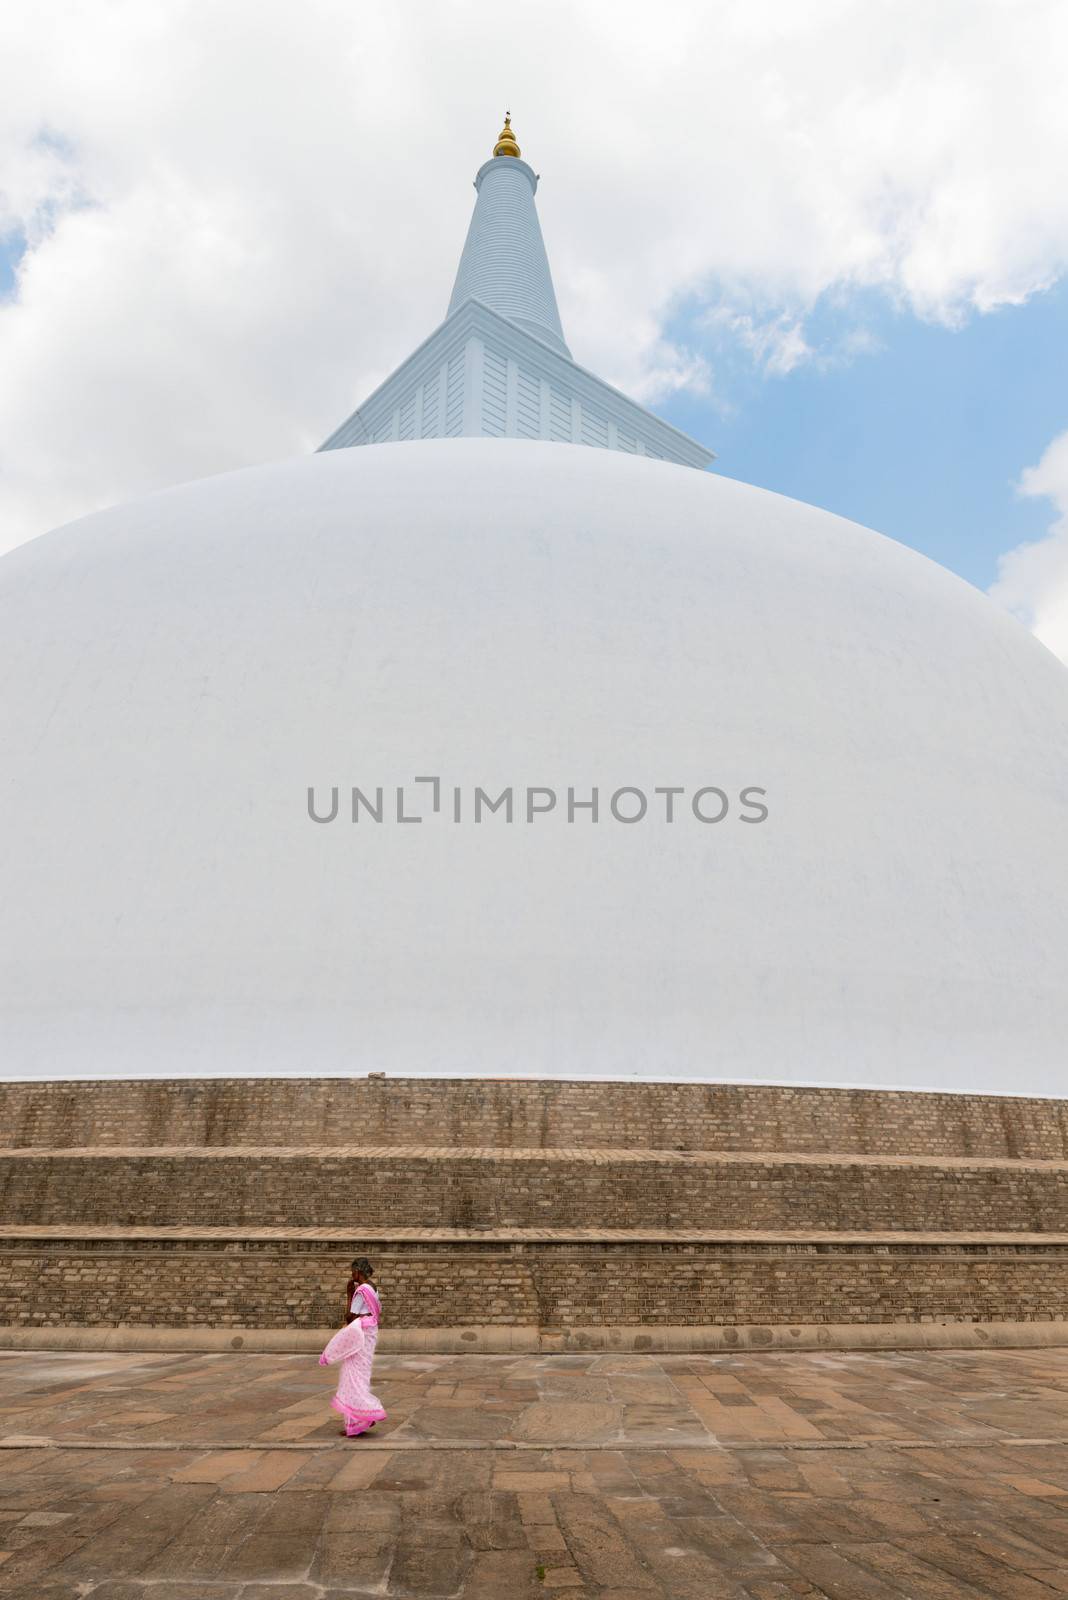 Woman in sari go round 103 m high white sacred stupa Ruwanmalisaya dagoba on Apr 16, 2013 in Anuradhapura, Sri Lanka